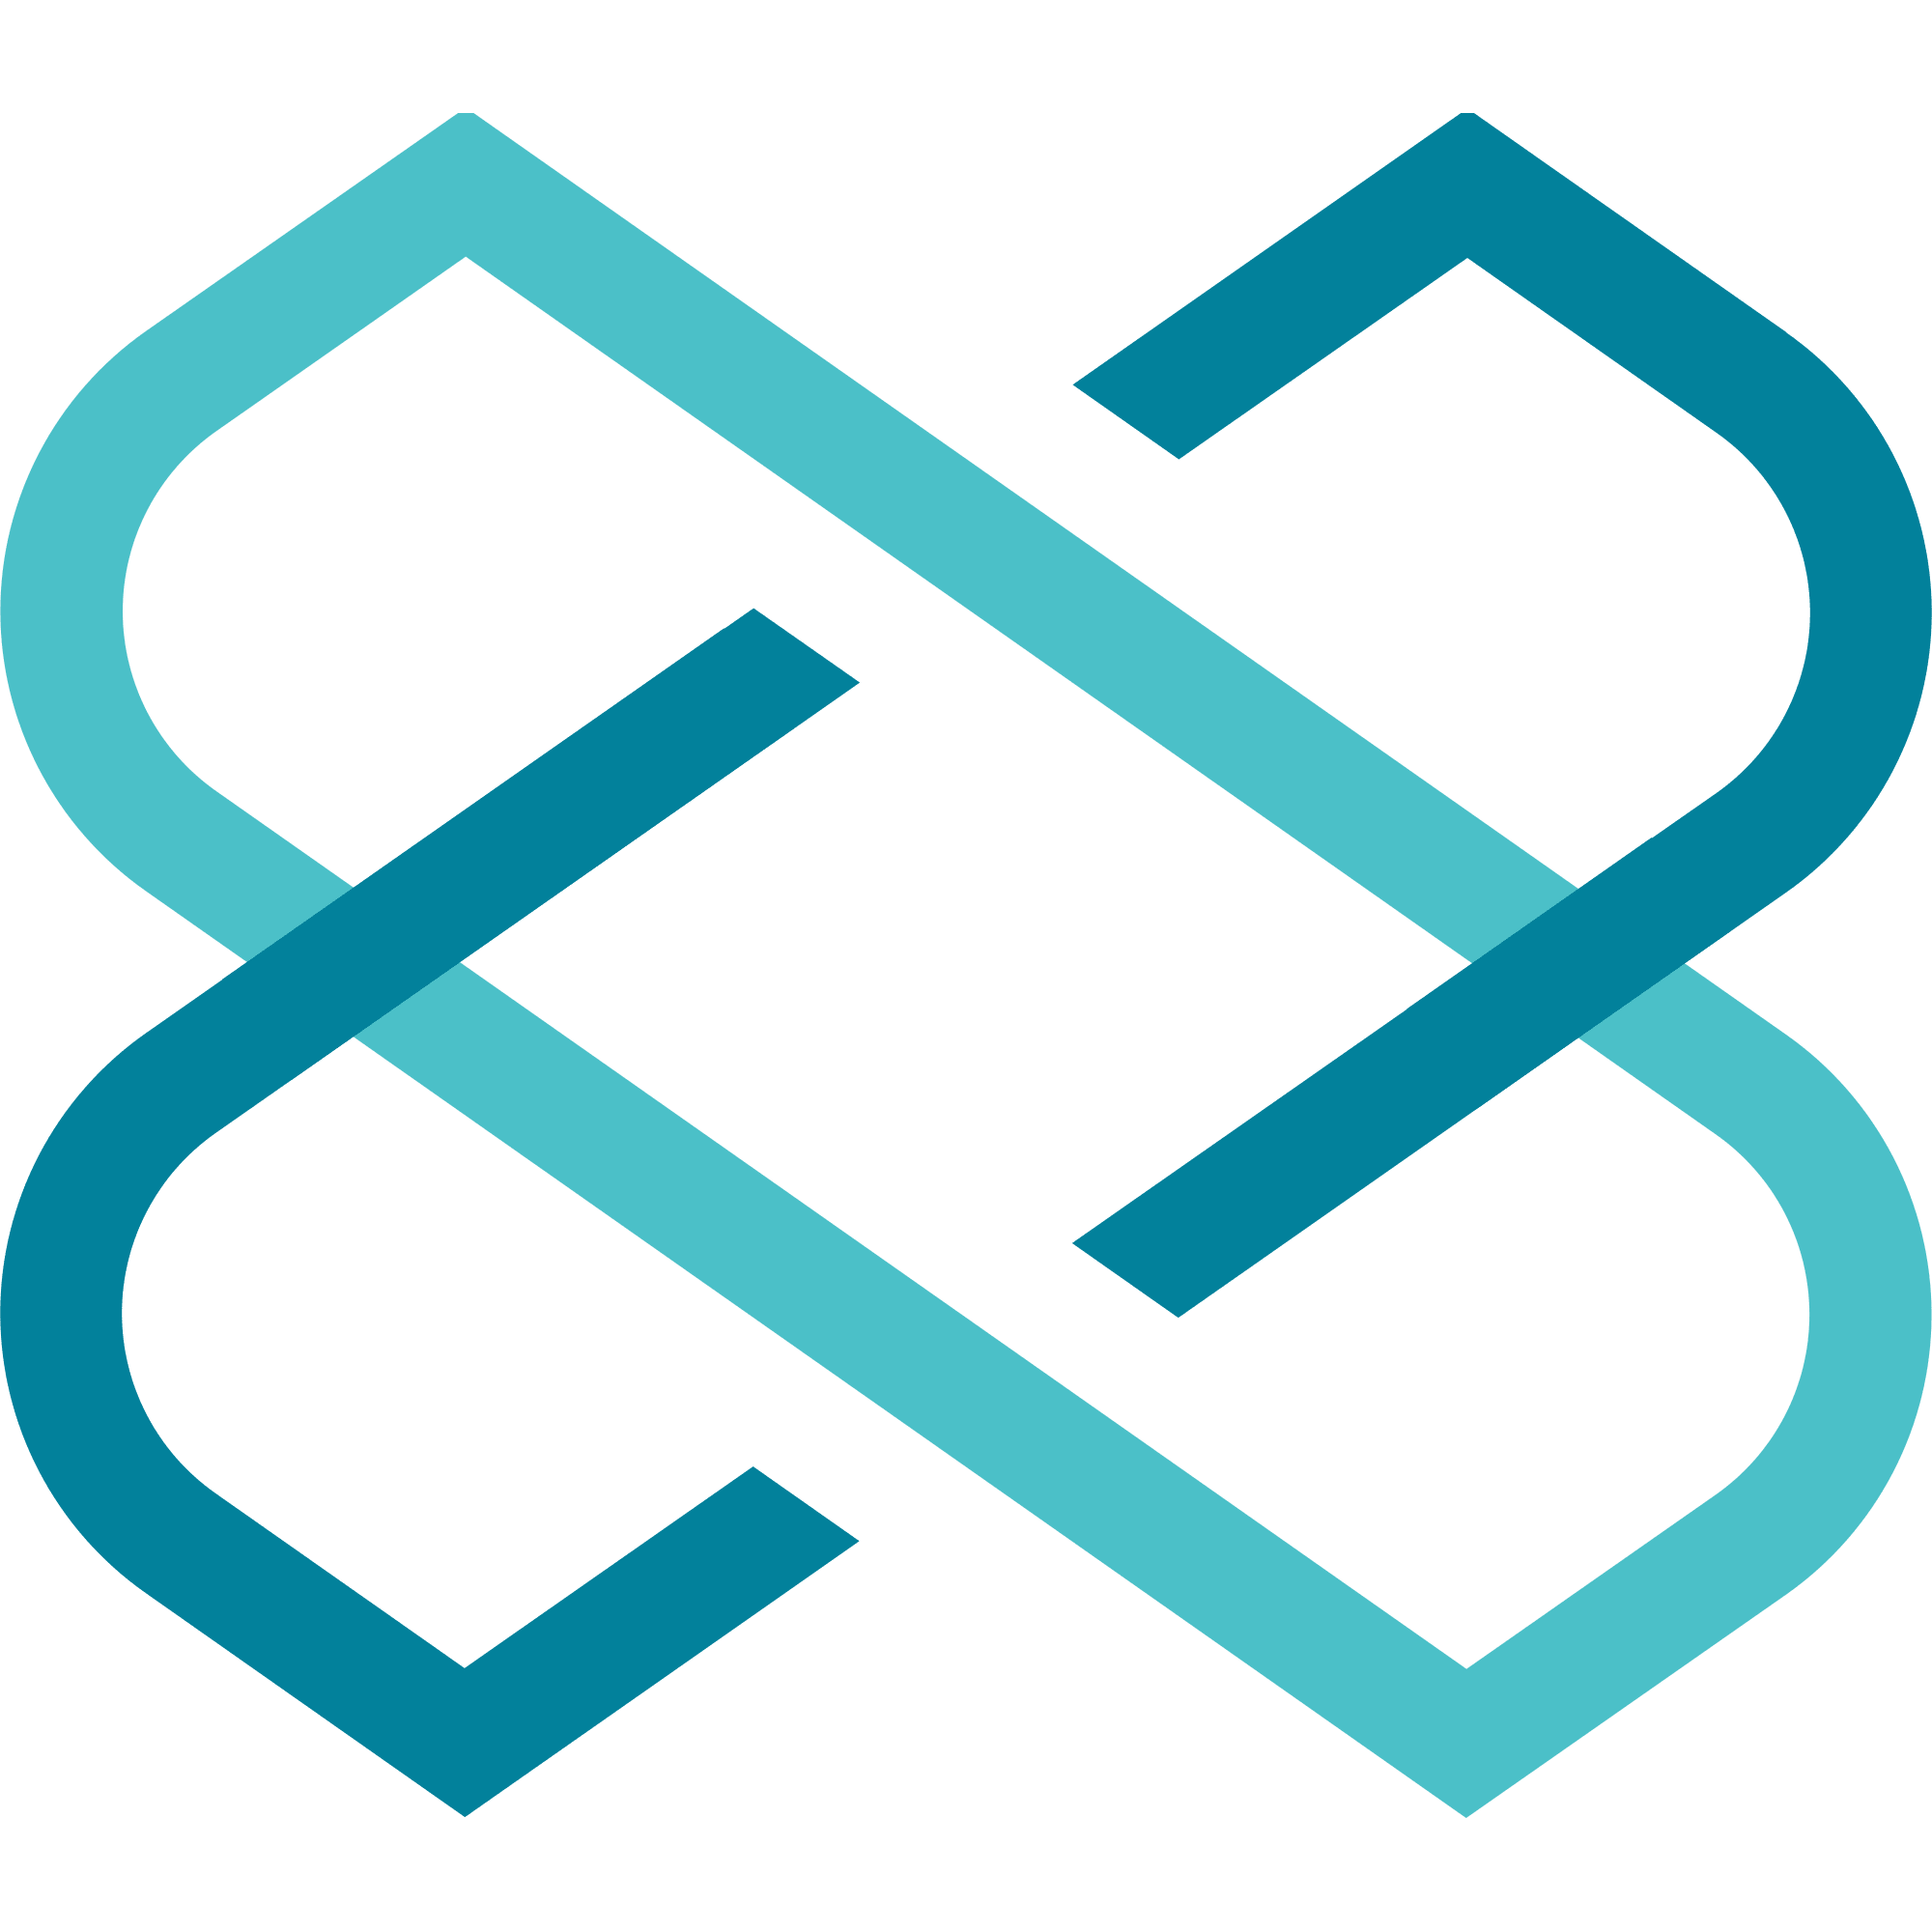 Loom Network logo in png format